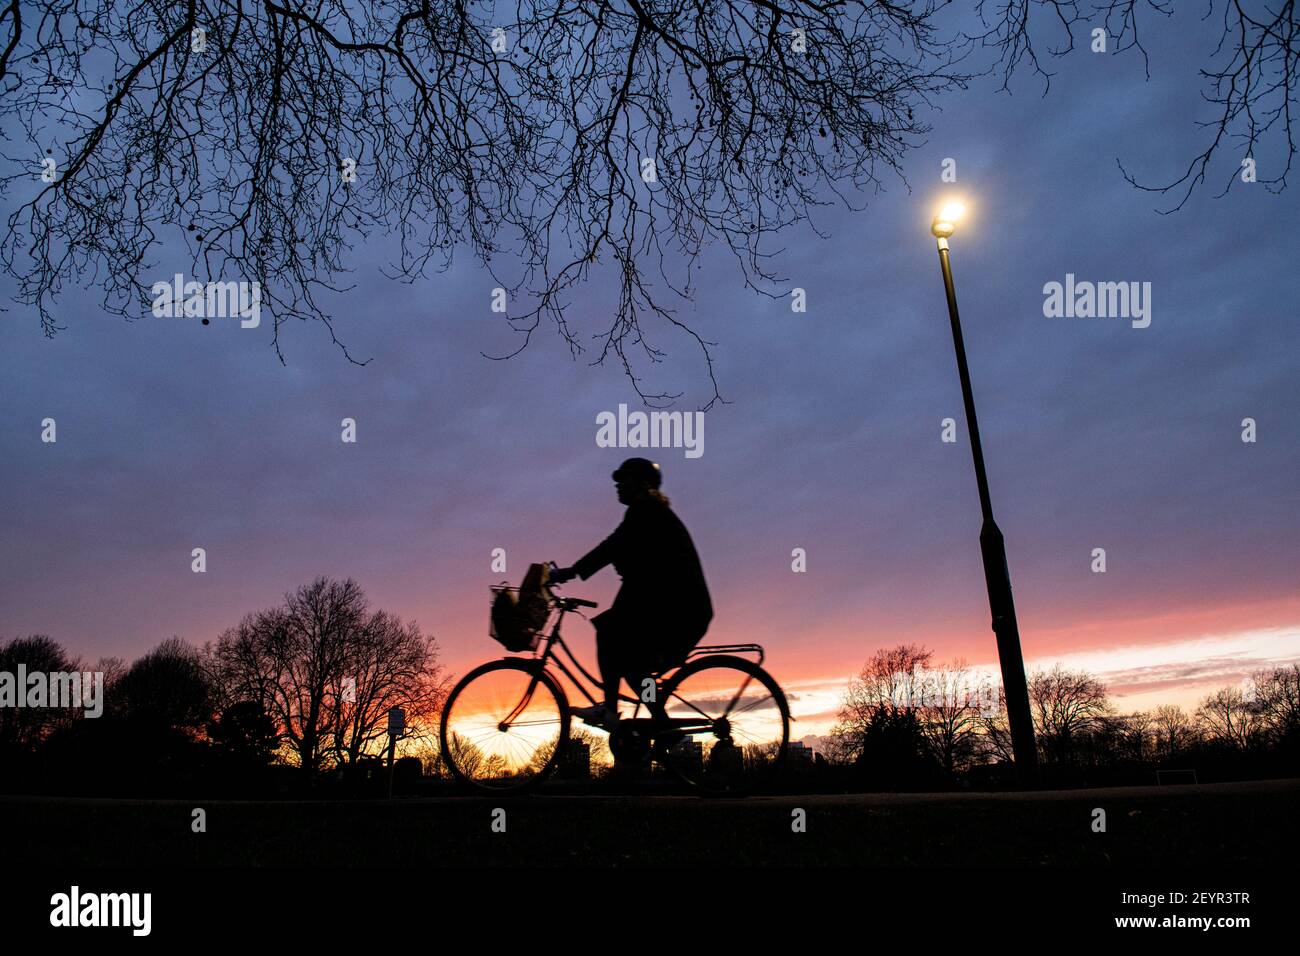 A cyclist rides through a London park at sunset under  street light Stock Photo